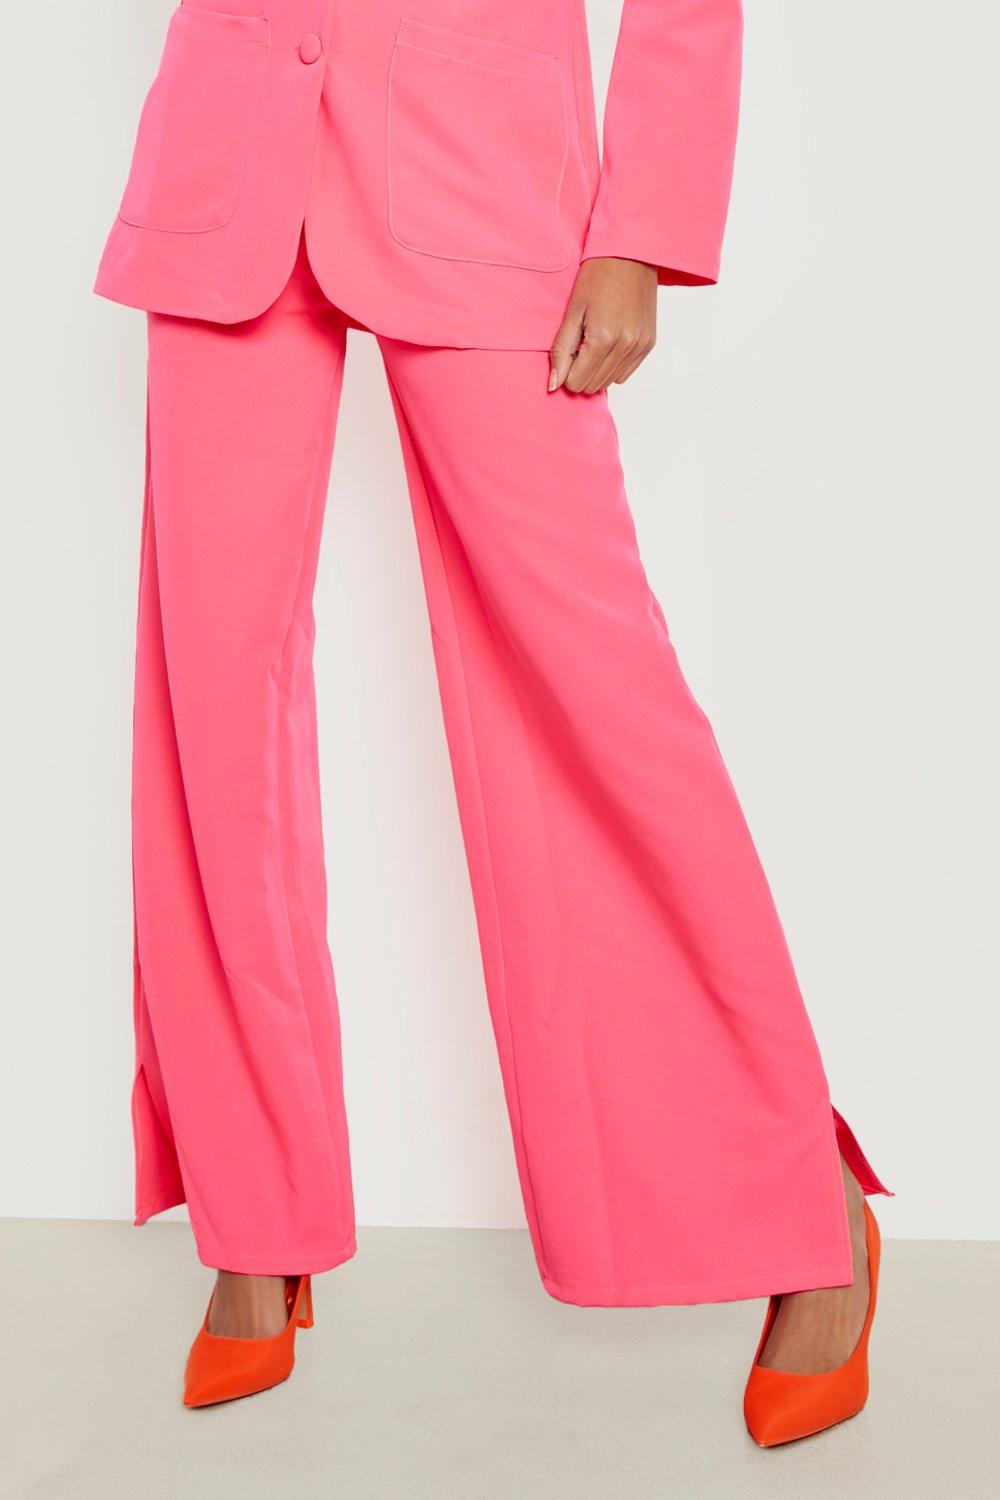 https://media.boohoo.com/i/boohoo/gzz12980_neon-pink_xl_3/female-neon-pink-neon-split-side-dress-pants